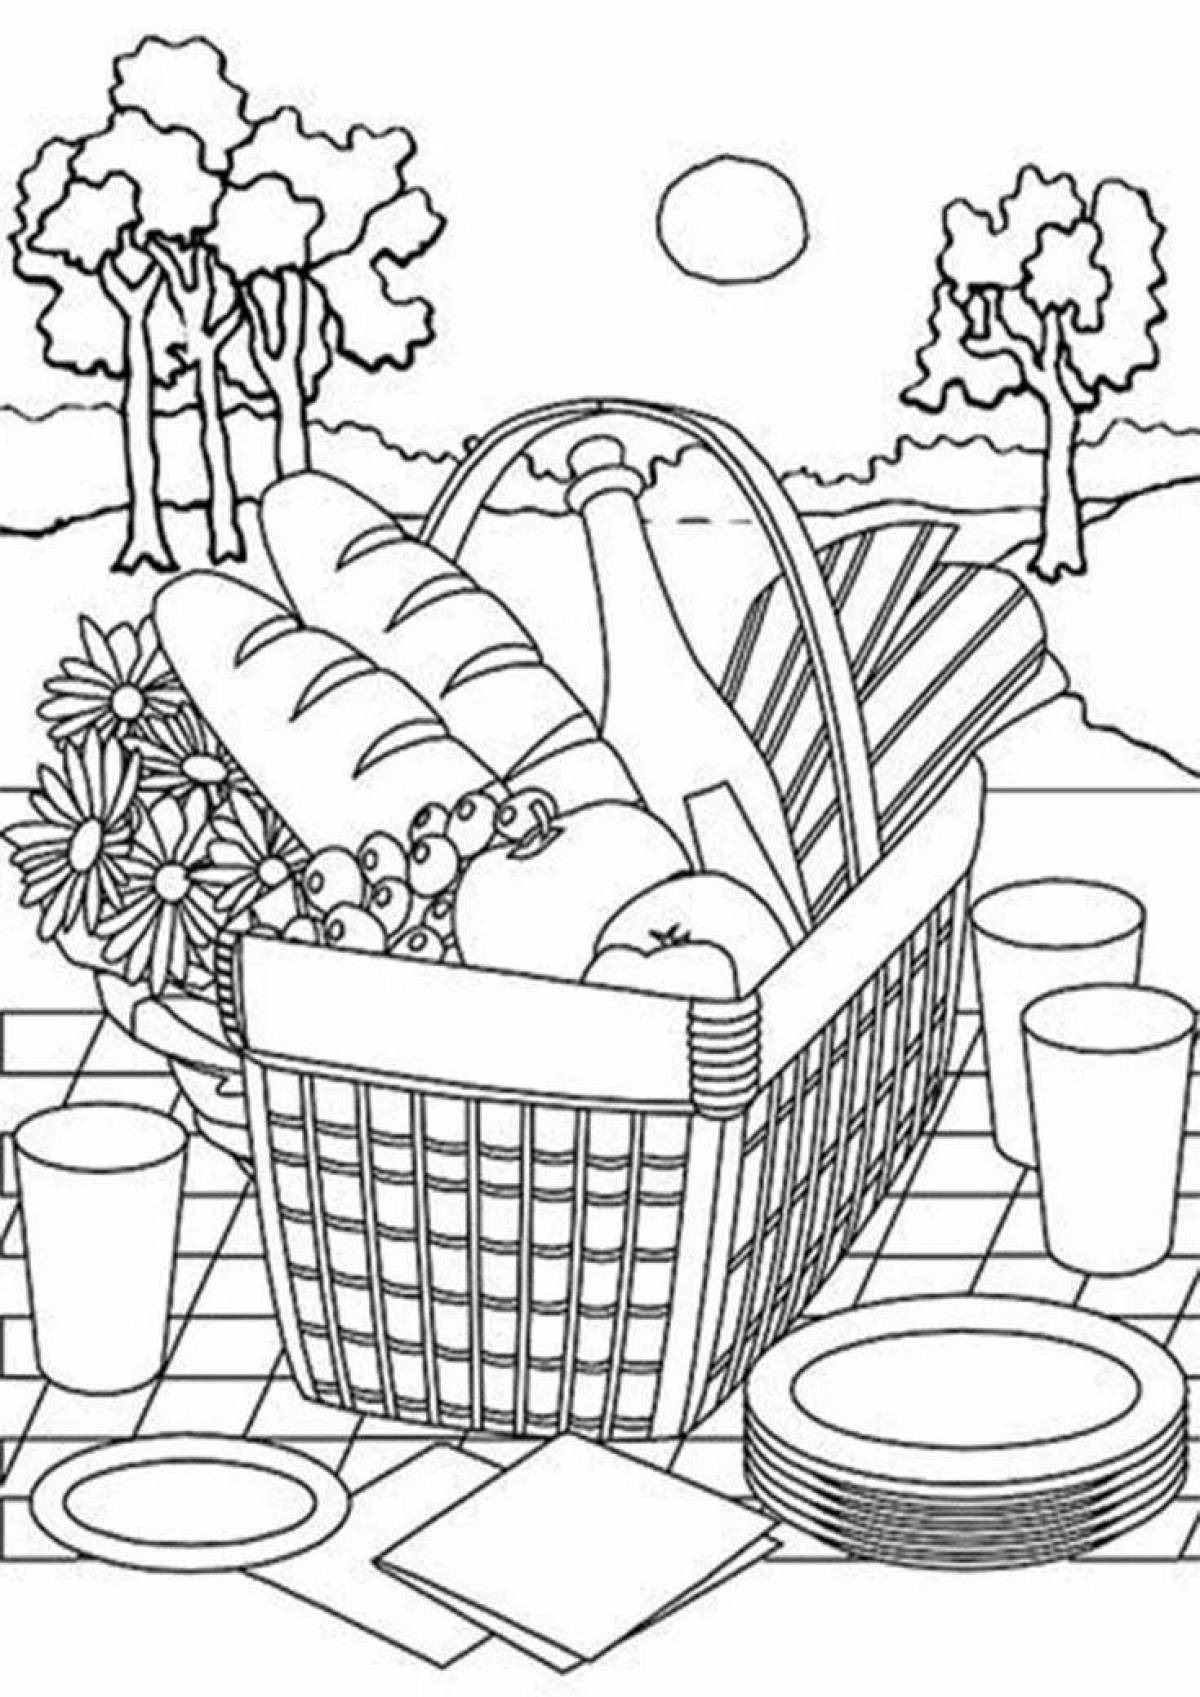 Coloring fun food basket